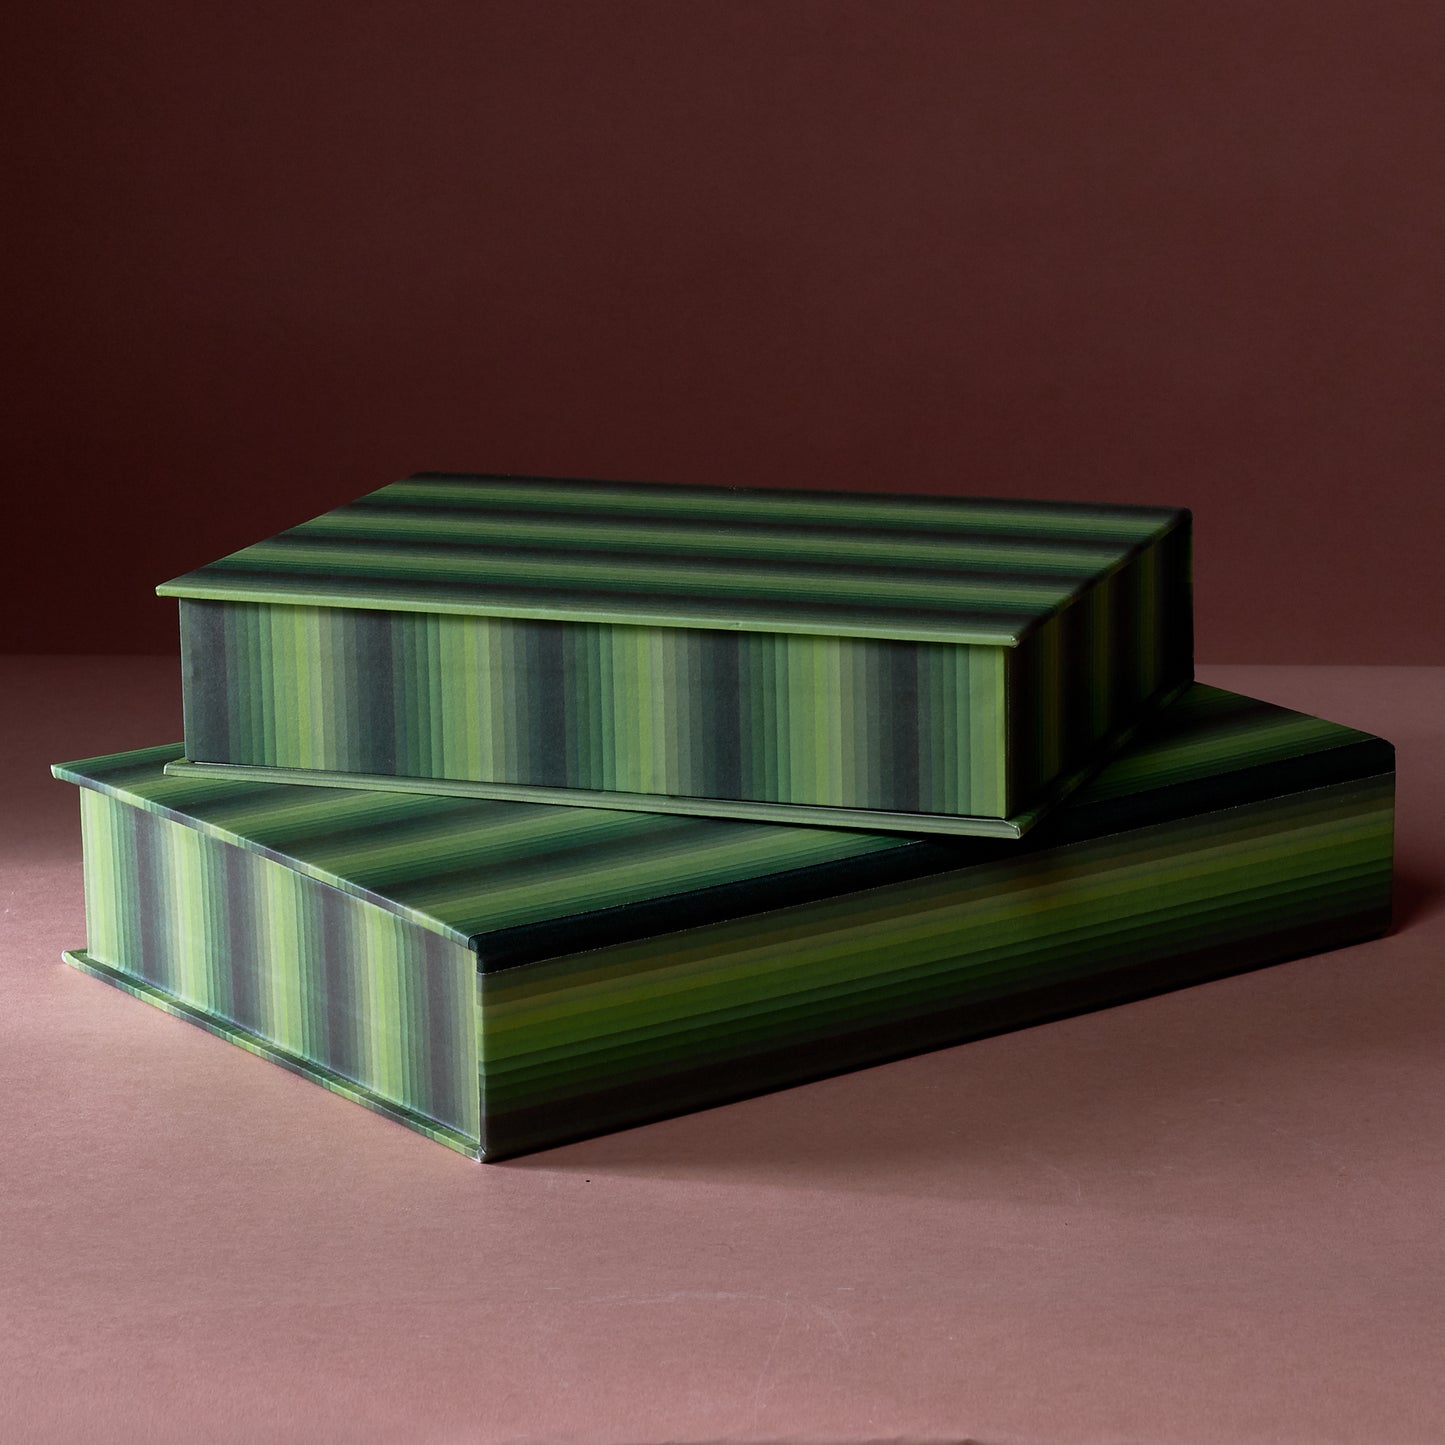 A5 Boxfile - Green Undulating Stripes